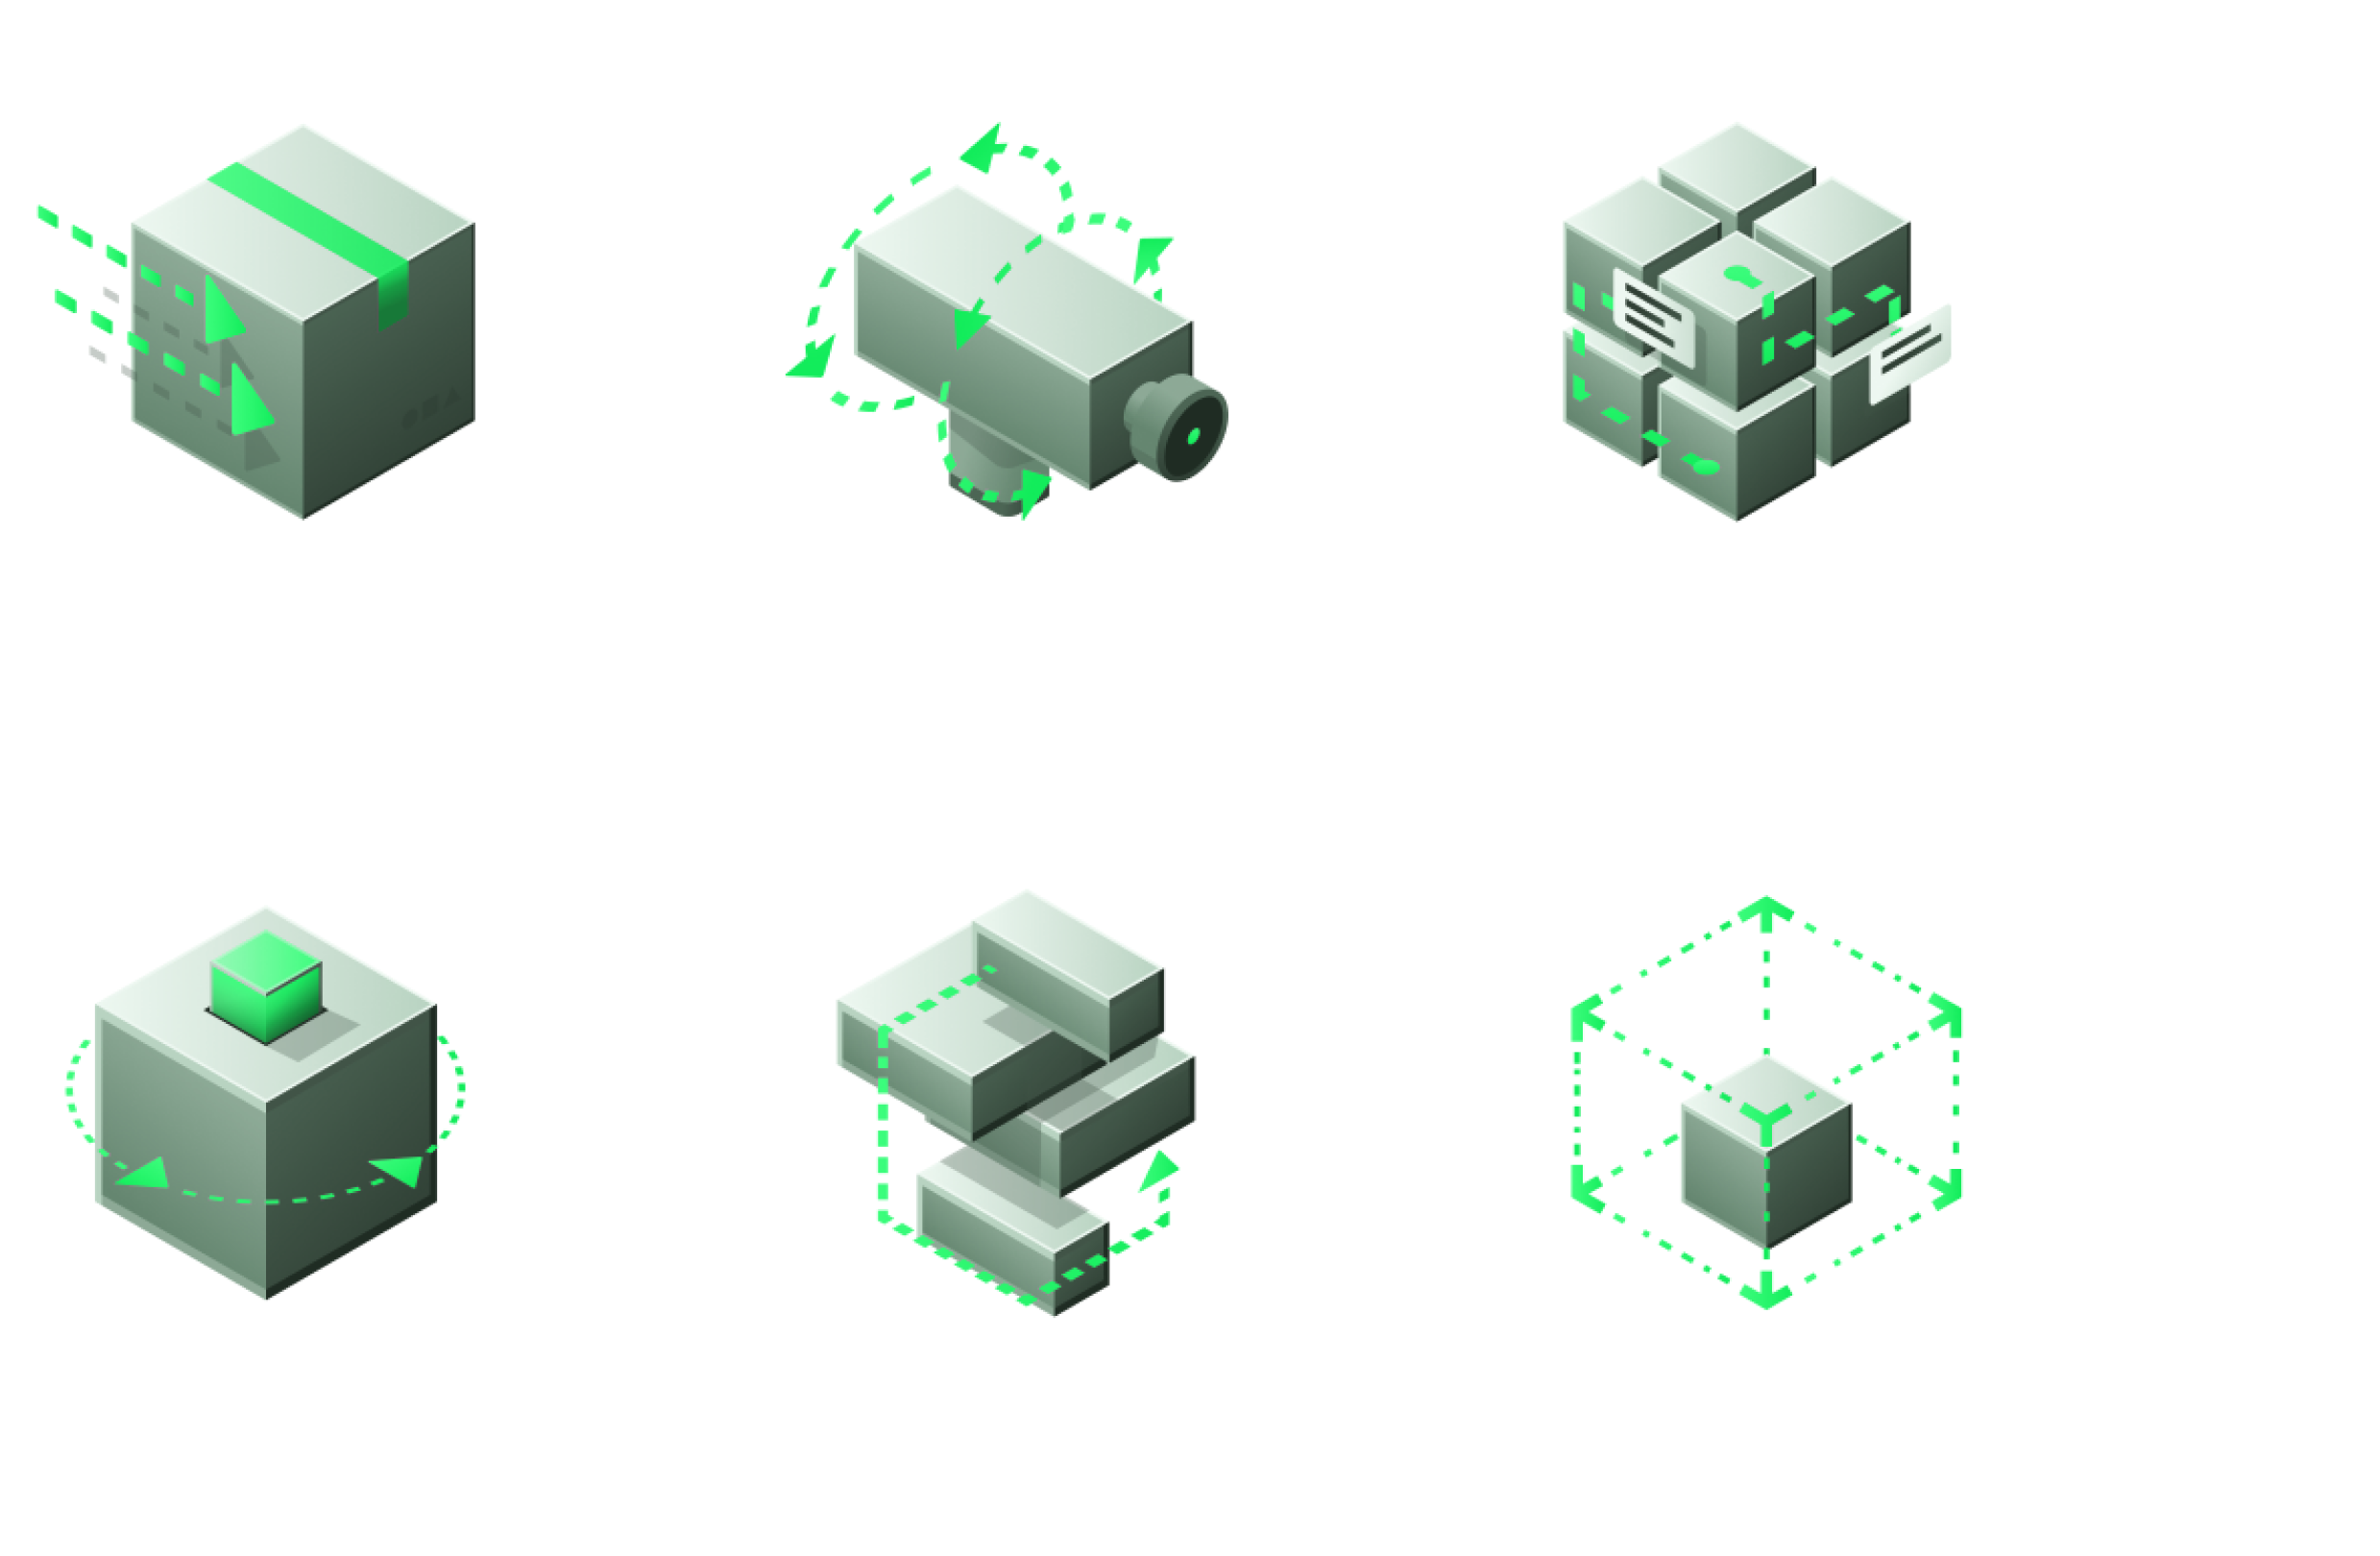 A set of cubes and a surveillance camera